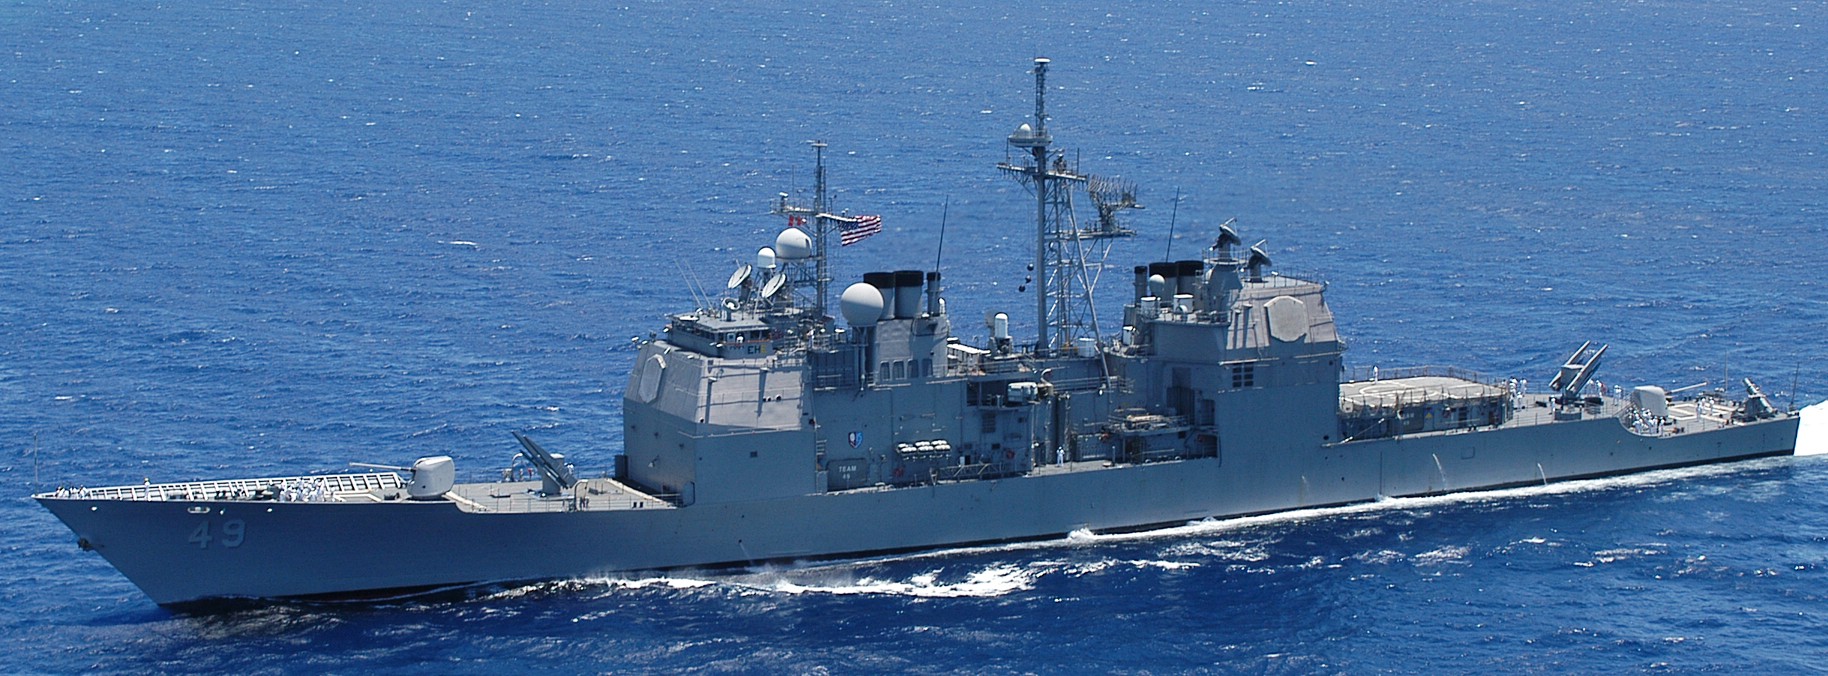 cg-49 uss vincennes ticonderoga class guided missile cruiser aegis us navy 19